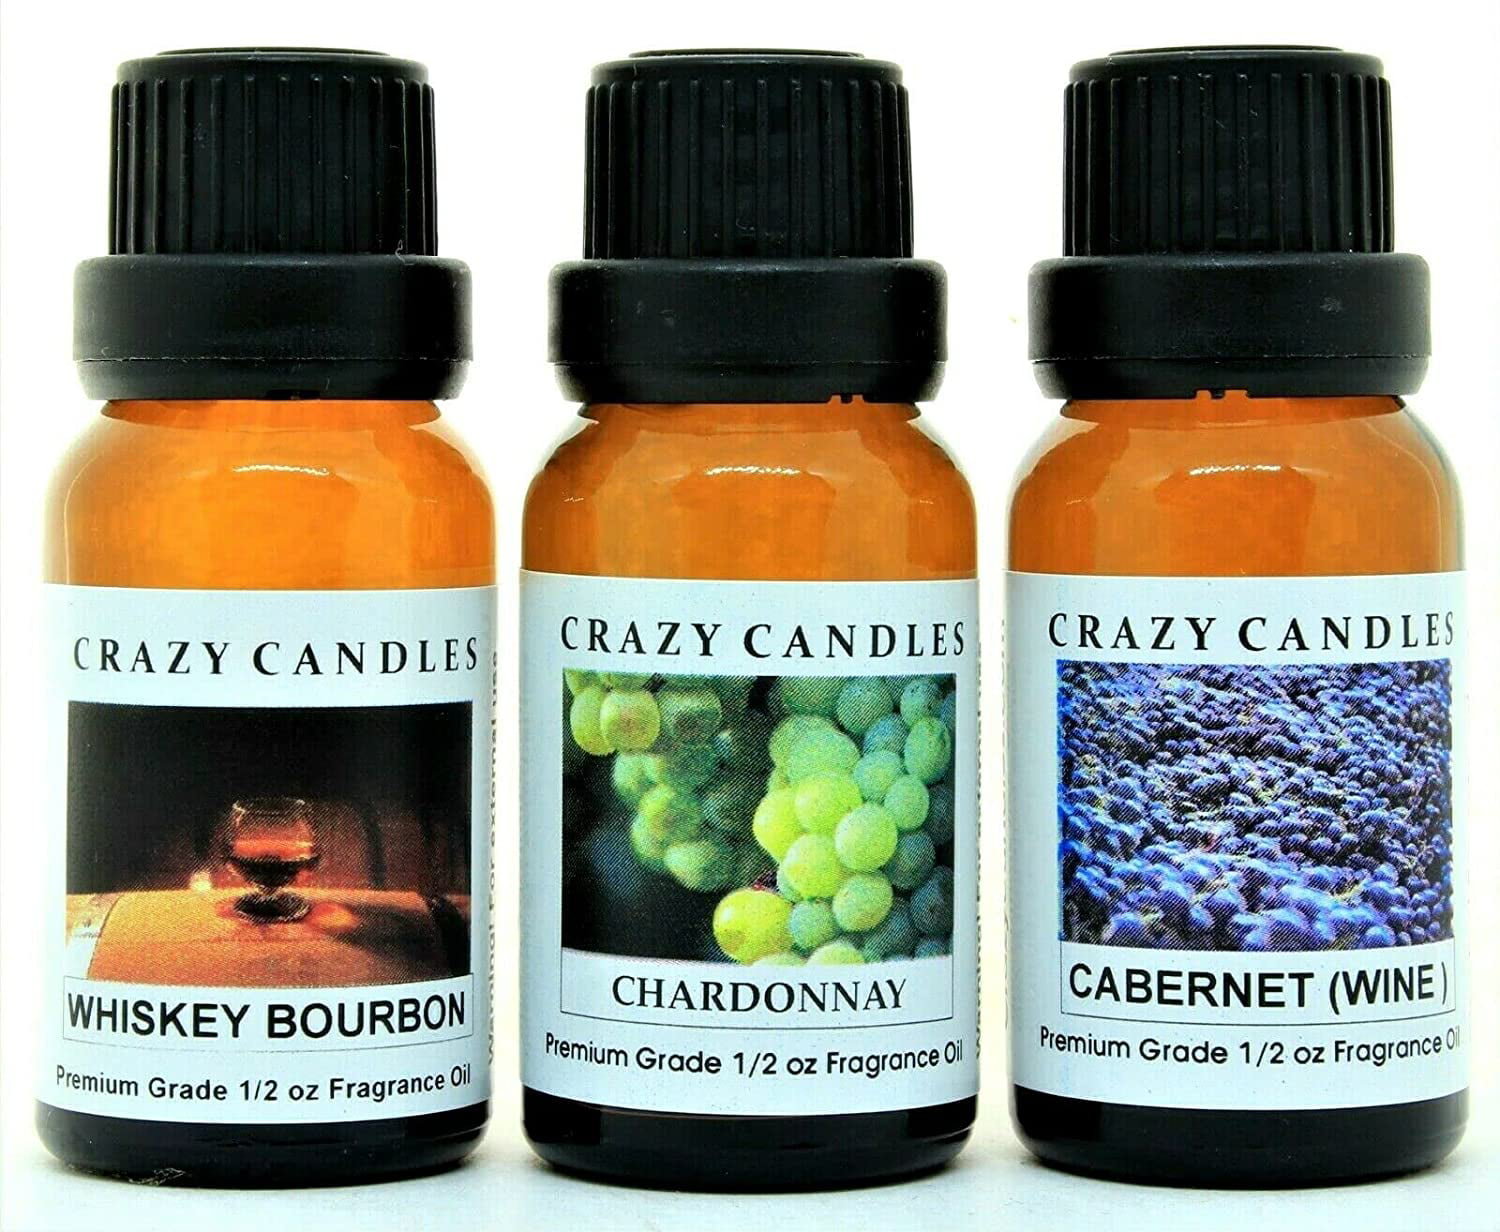 Crazy Candles 3 Bottle Set: Whiskey Bourbon, Chardonnay, Cabernet